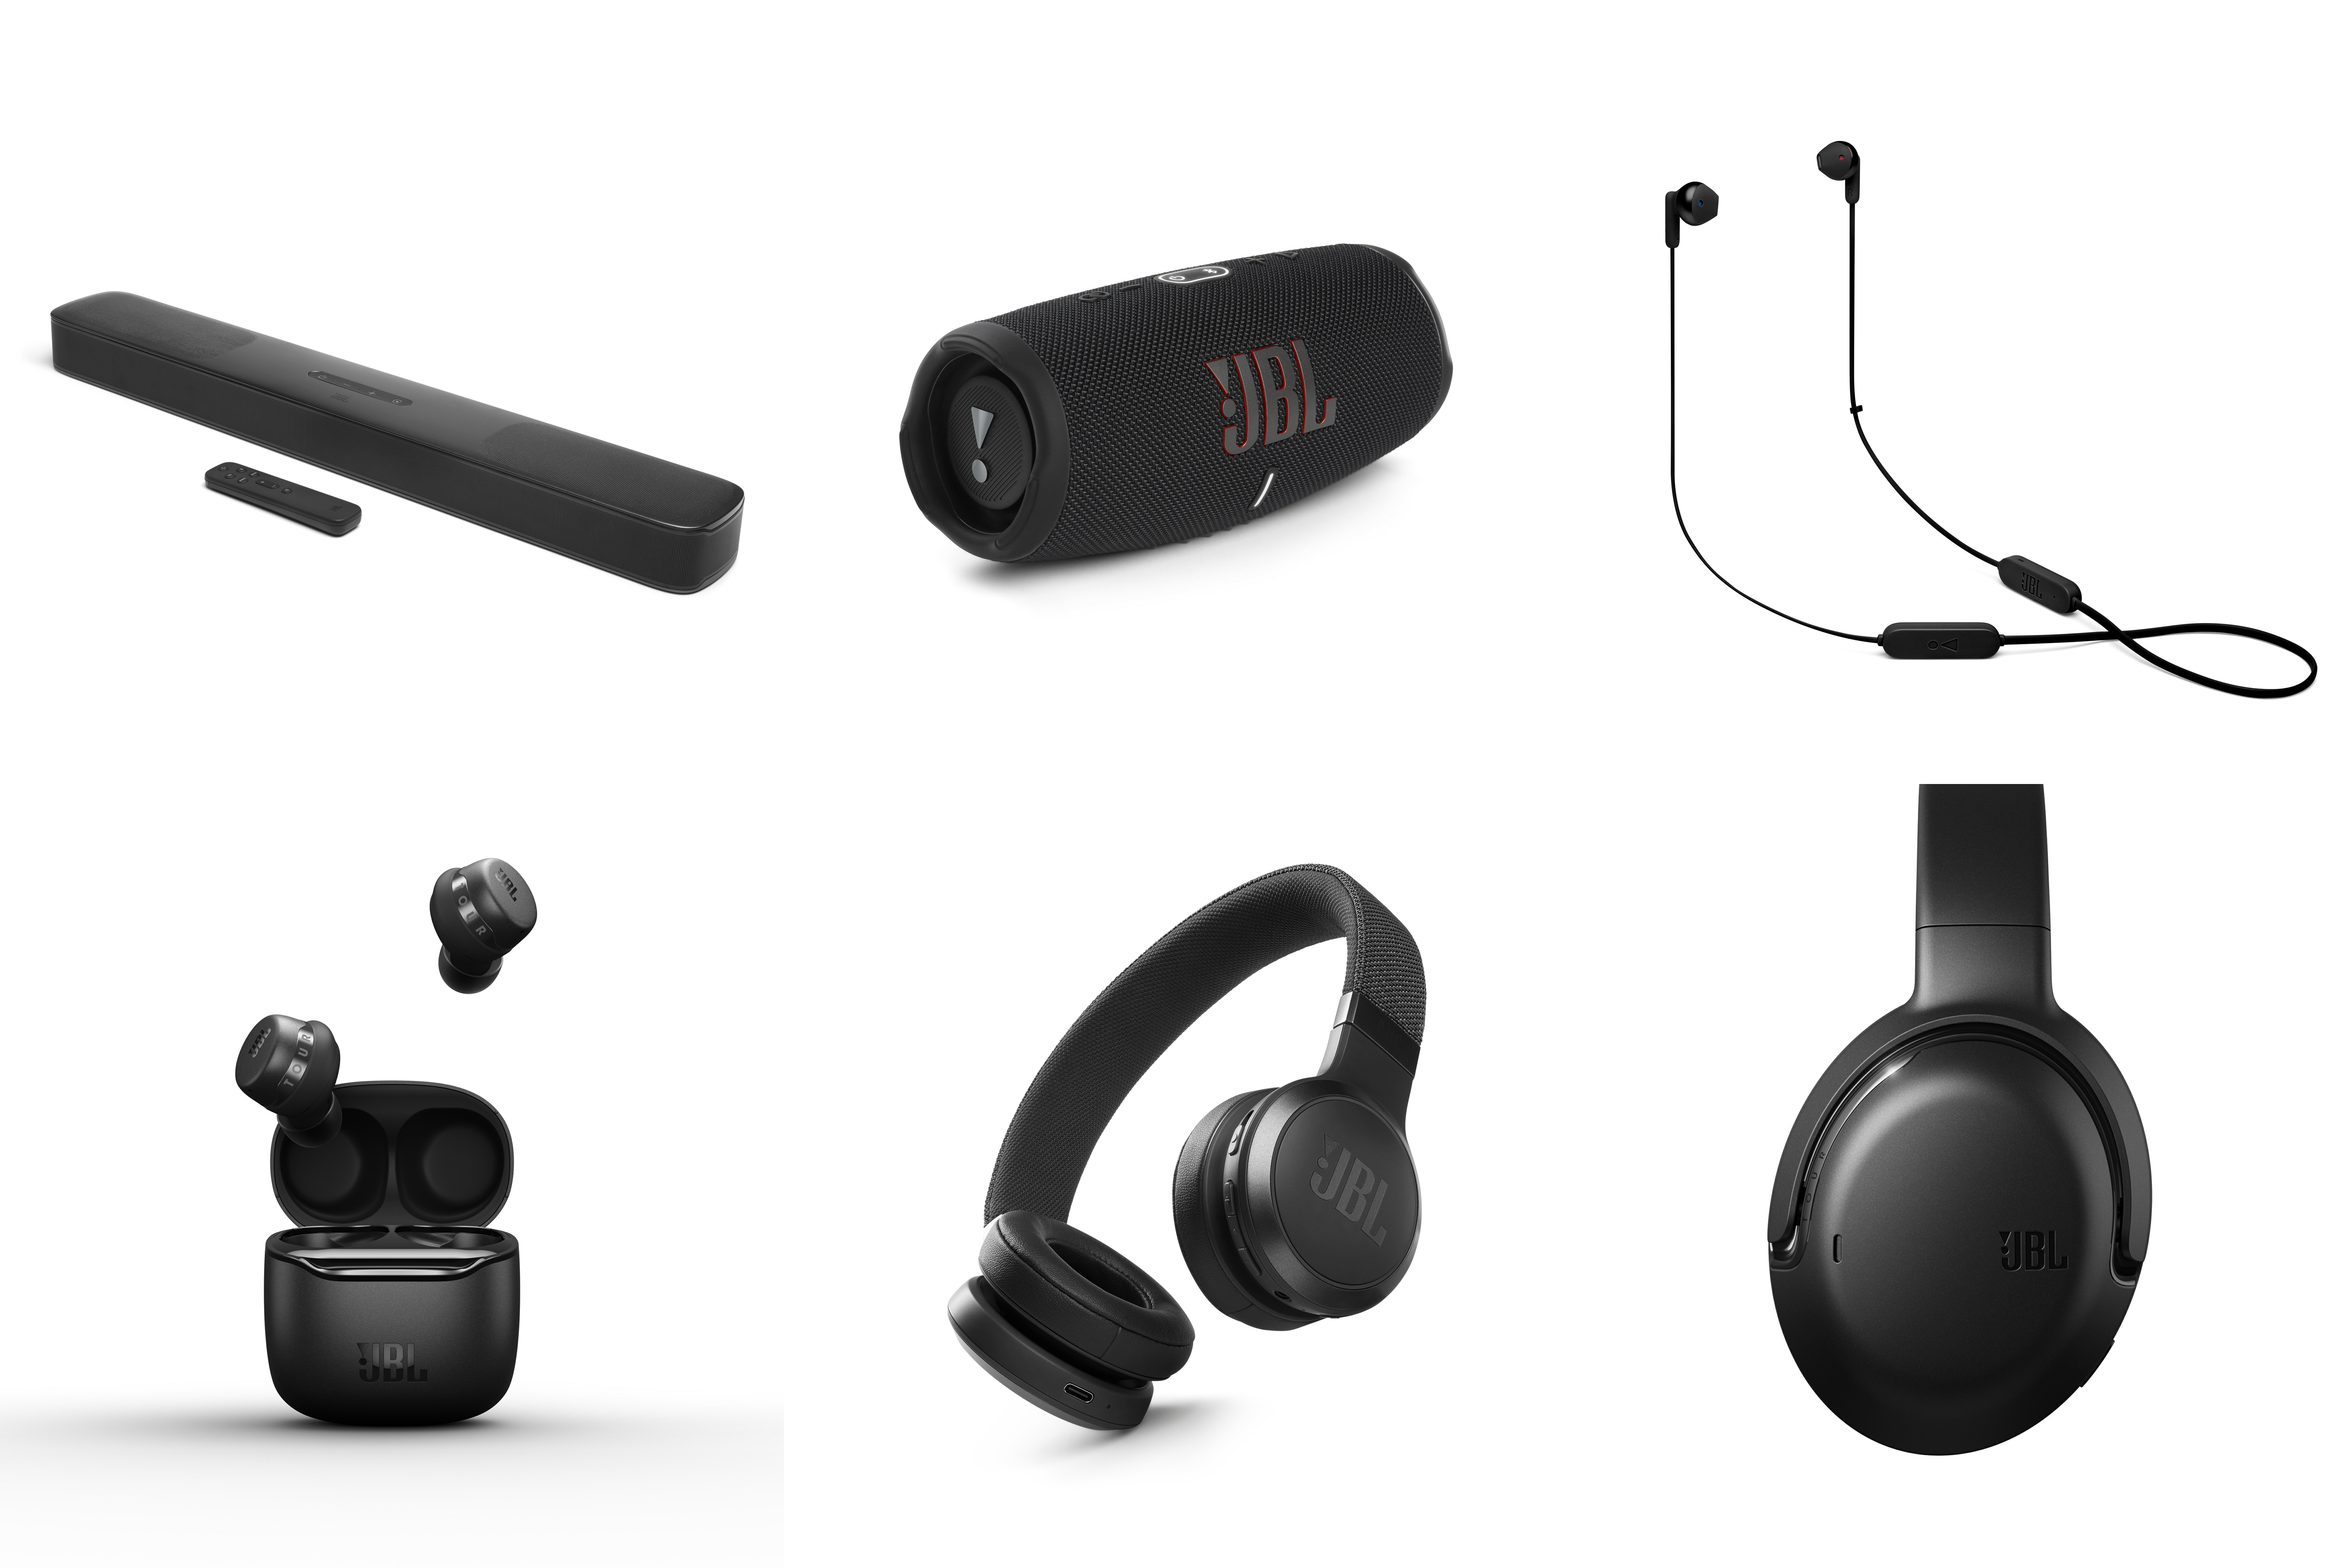 JBL announce a new soundbar, Bluetooth speaker, headphones and earbuds